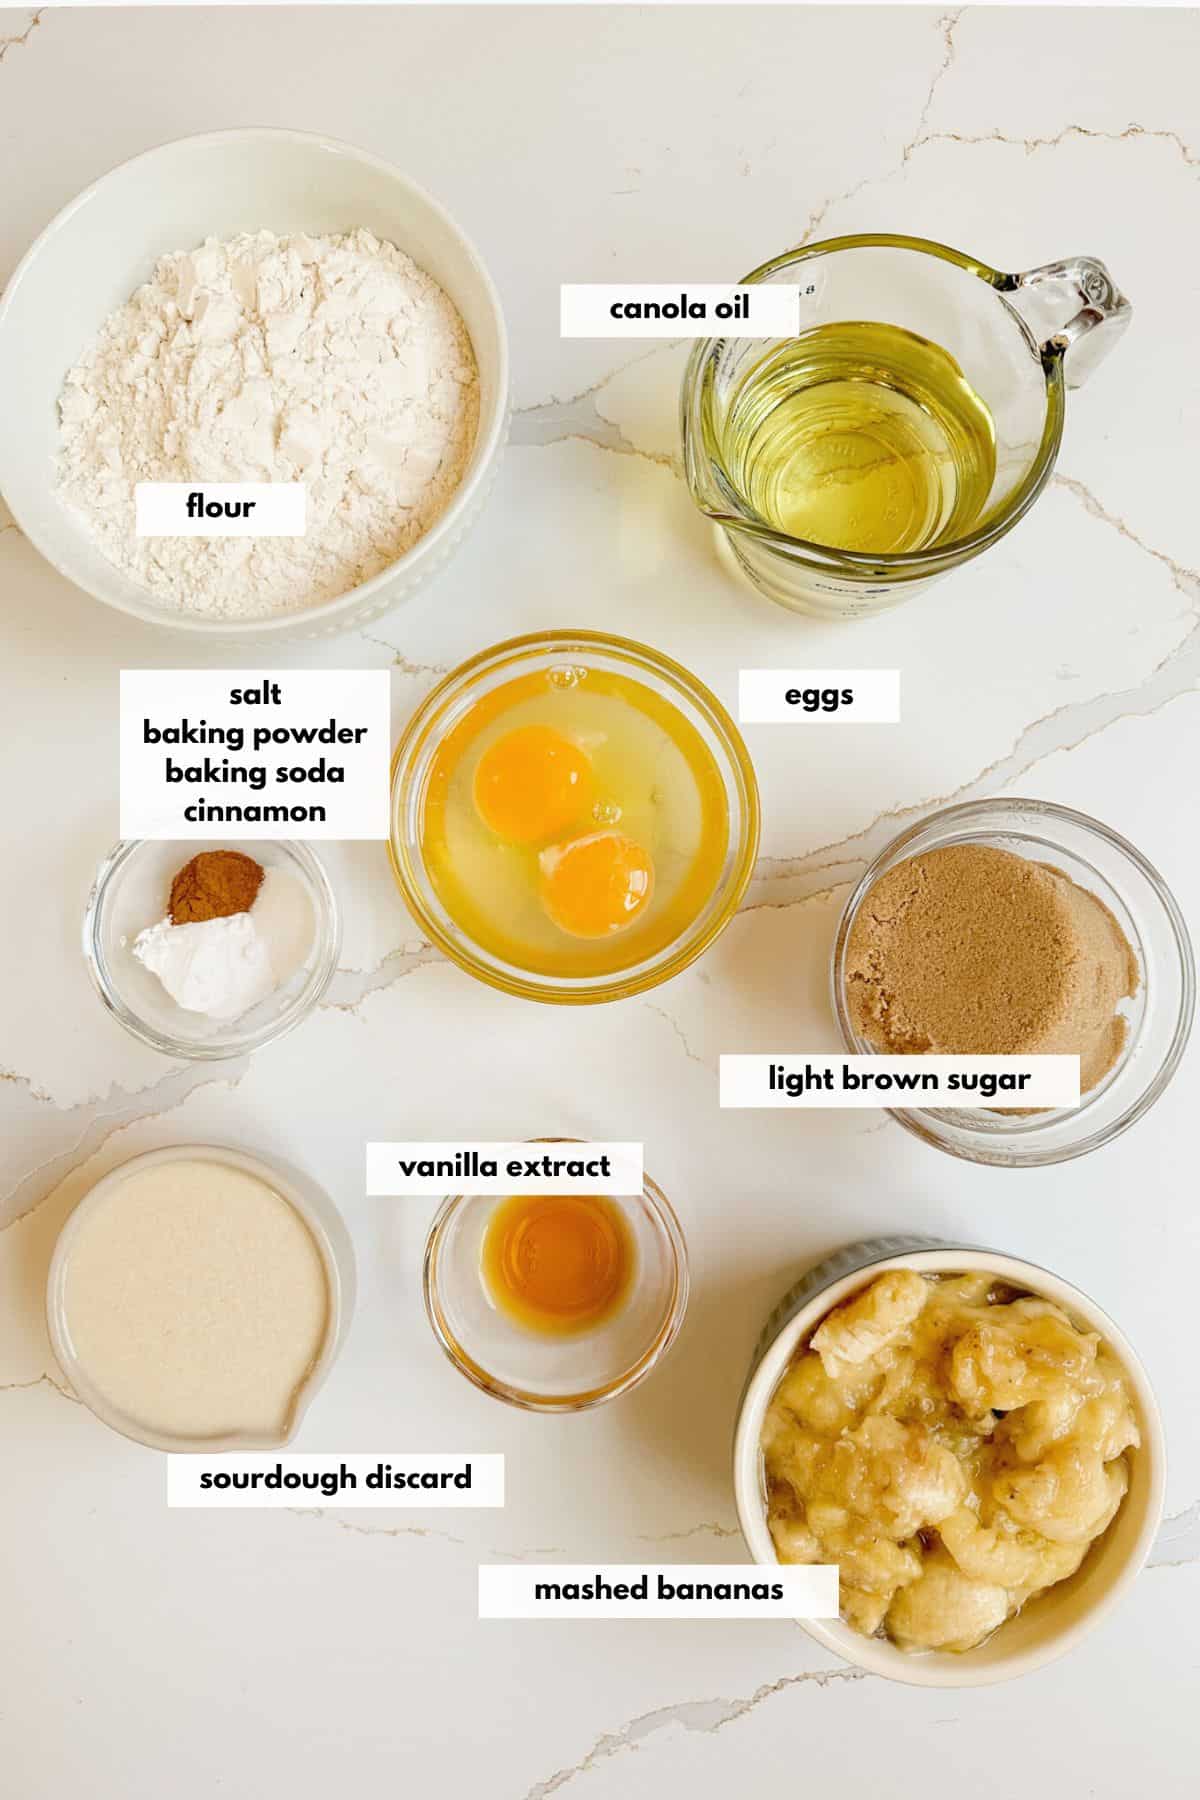 Ingredients for banana muffins are sourdough discard, mashed banana, canola oil, eggs, brown sugar, flour, baking soda, baking powder, cinnamon and salt.